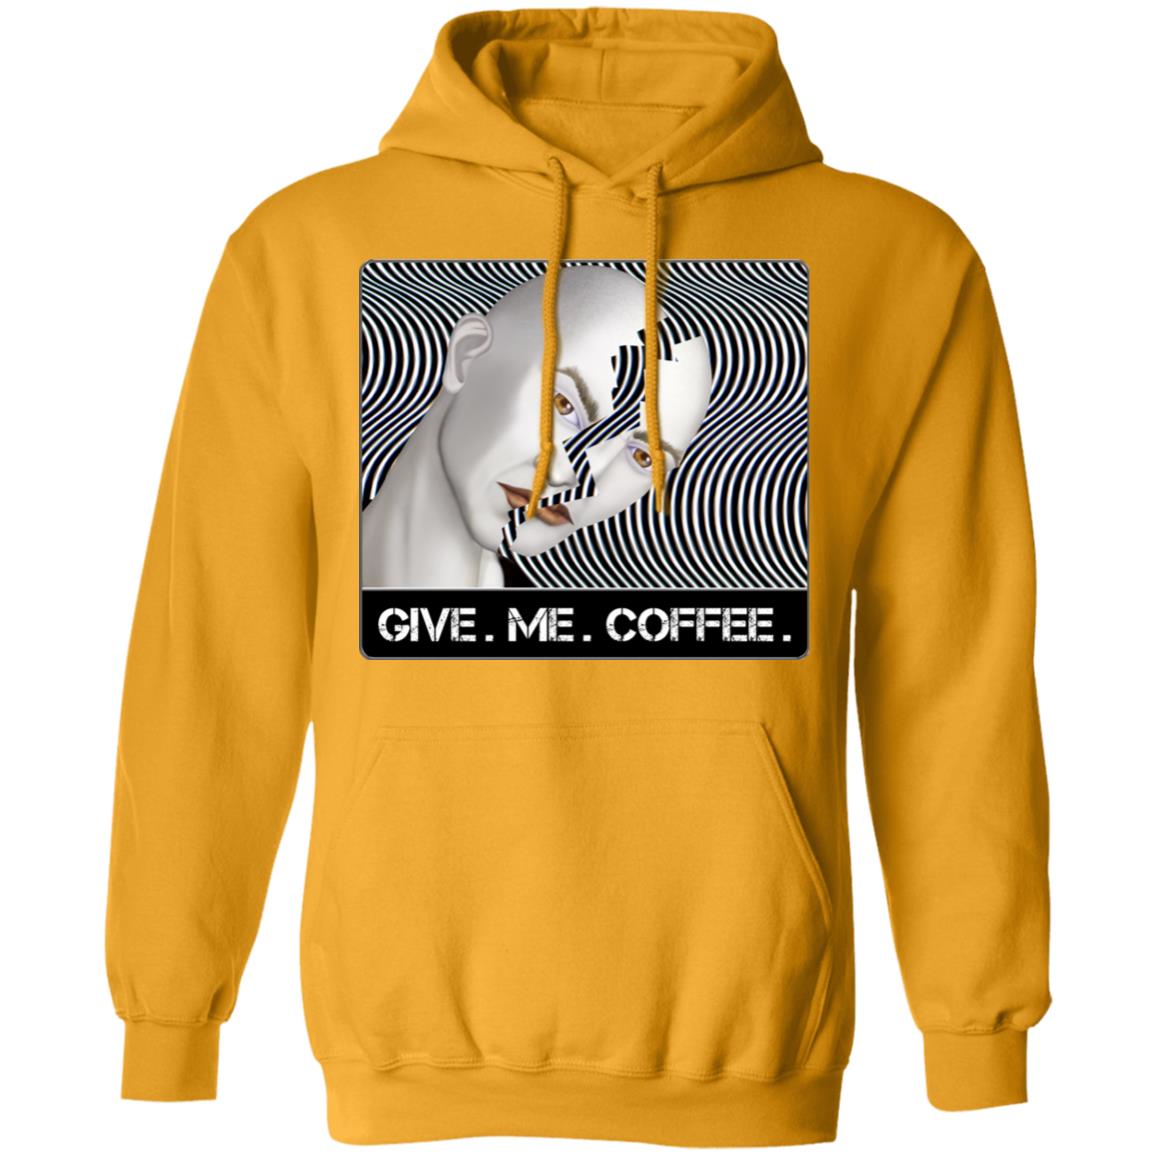 GIVE. ME. COFFEE. - Adult Hoodie